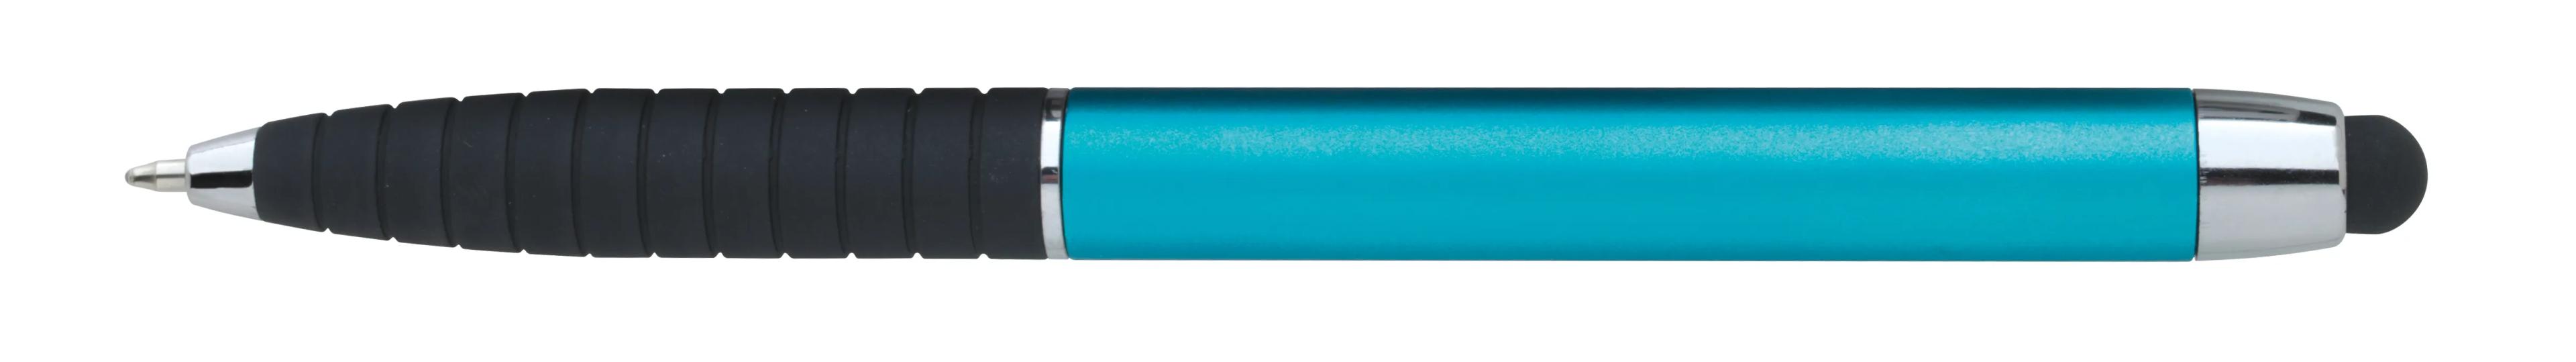 Metallic Cool Grip Stylus Pen 17 of 43